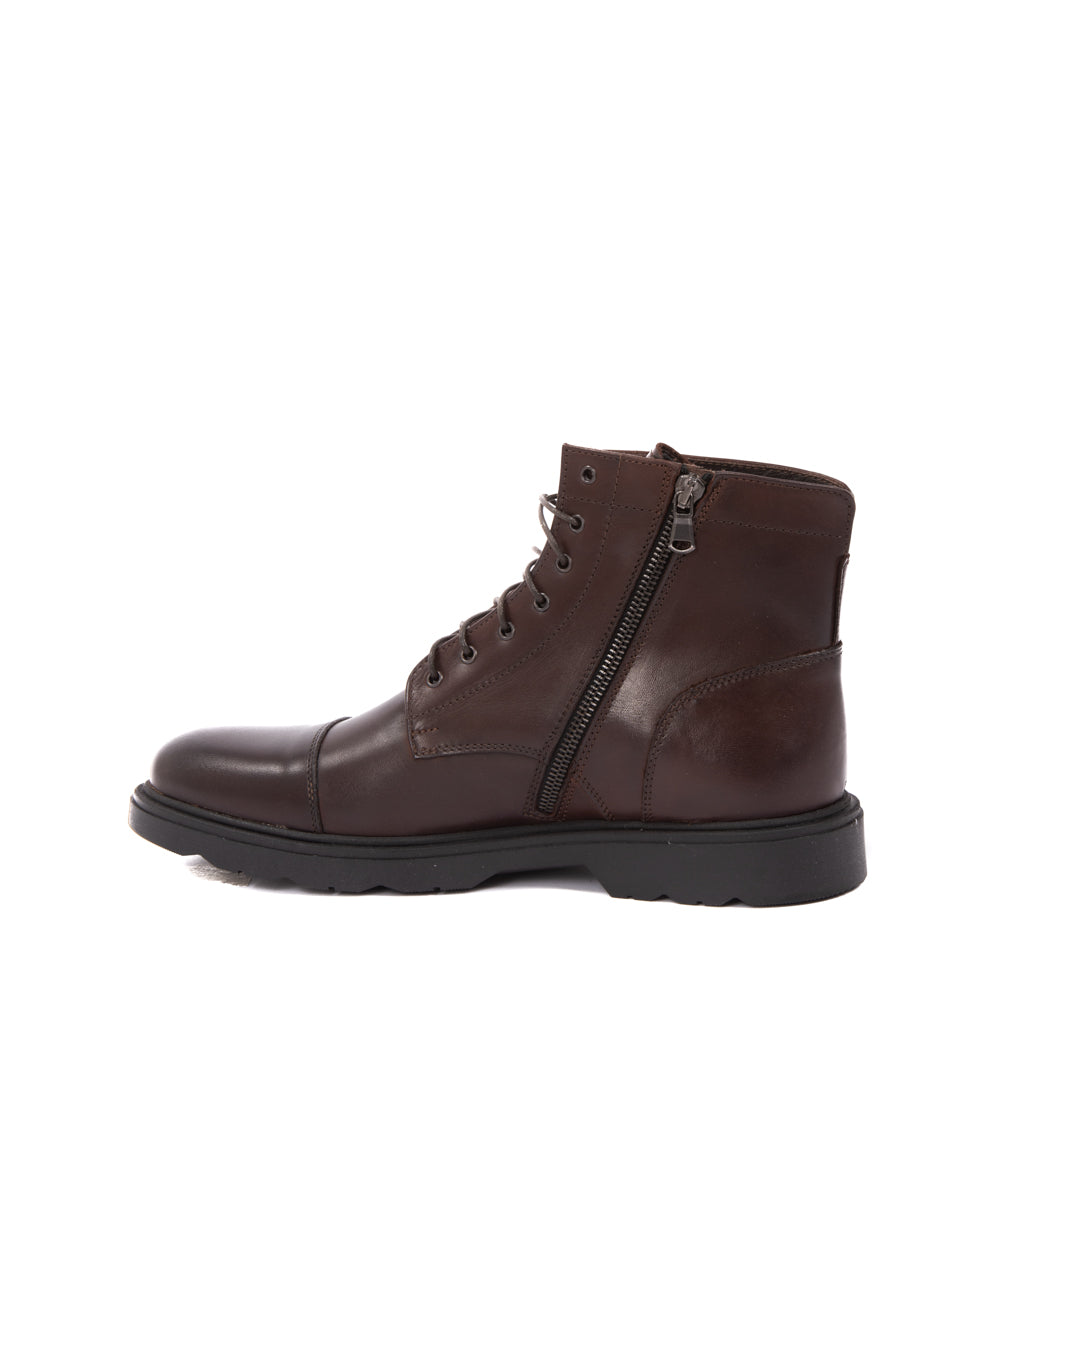 Z02 - dark brown leather combat boots with zip